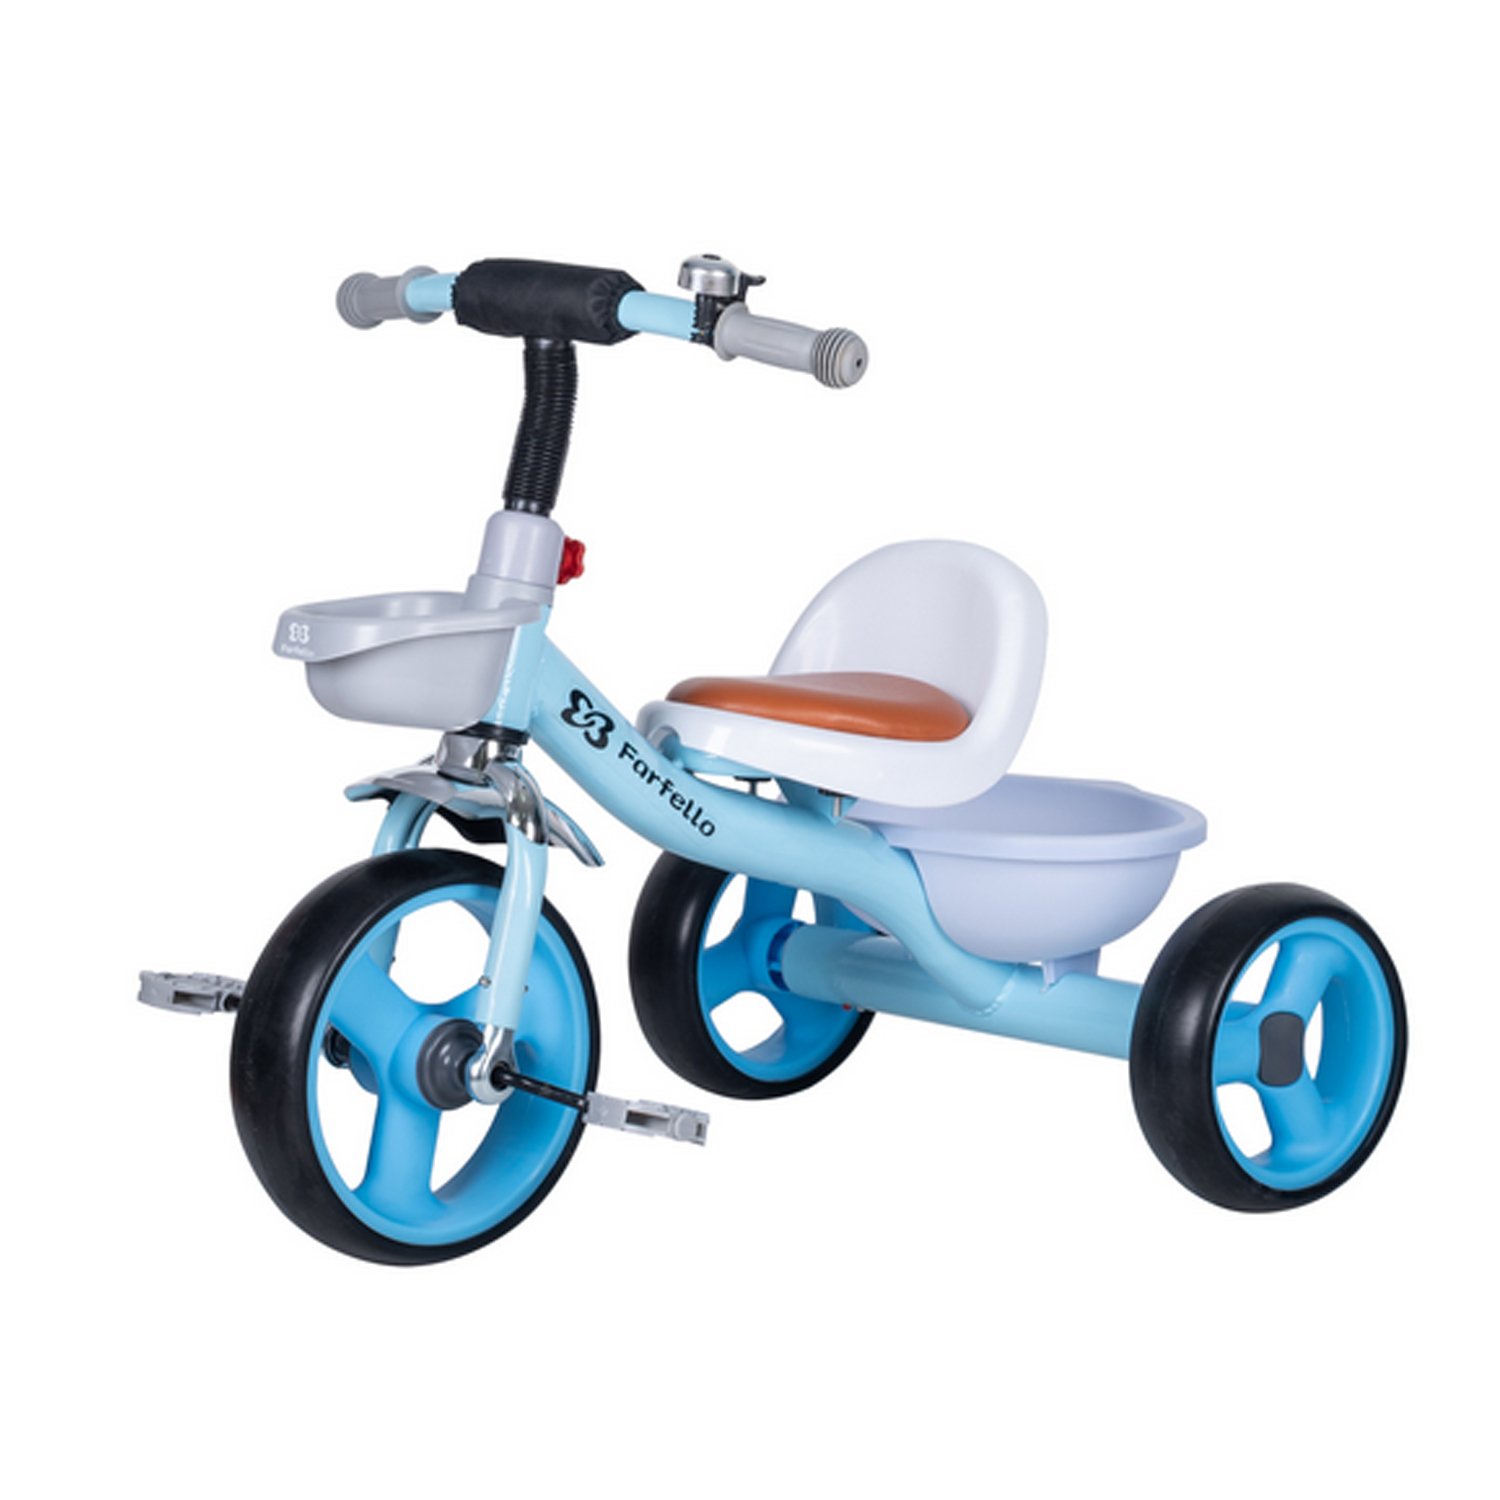 Велосипед Farfello, детский, трехколесный, (2022), синий, YLT-855 детский электромобиль farfello мотоцикл 111 синий 2